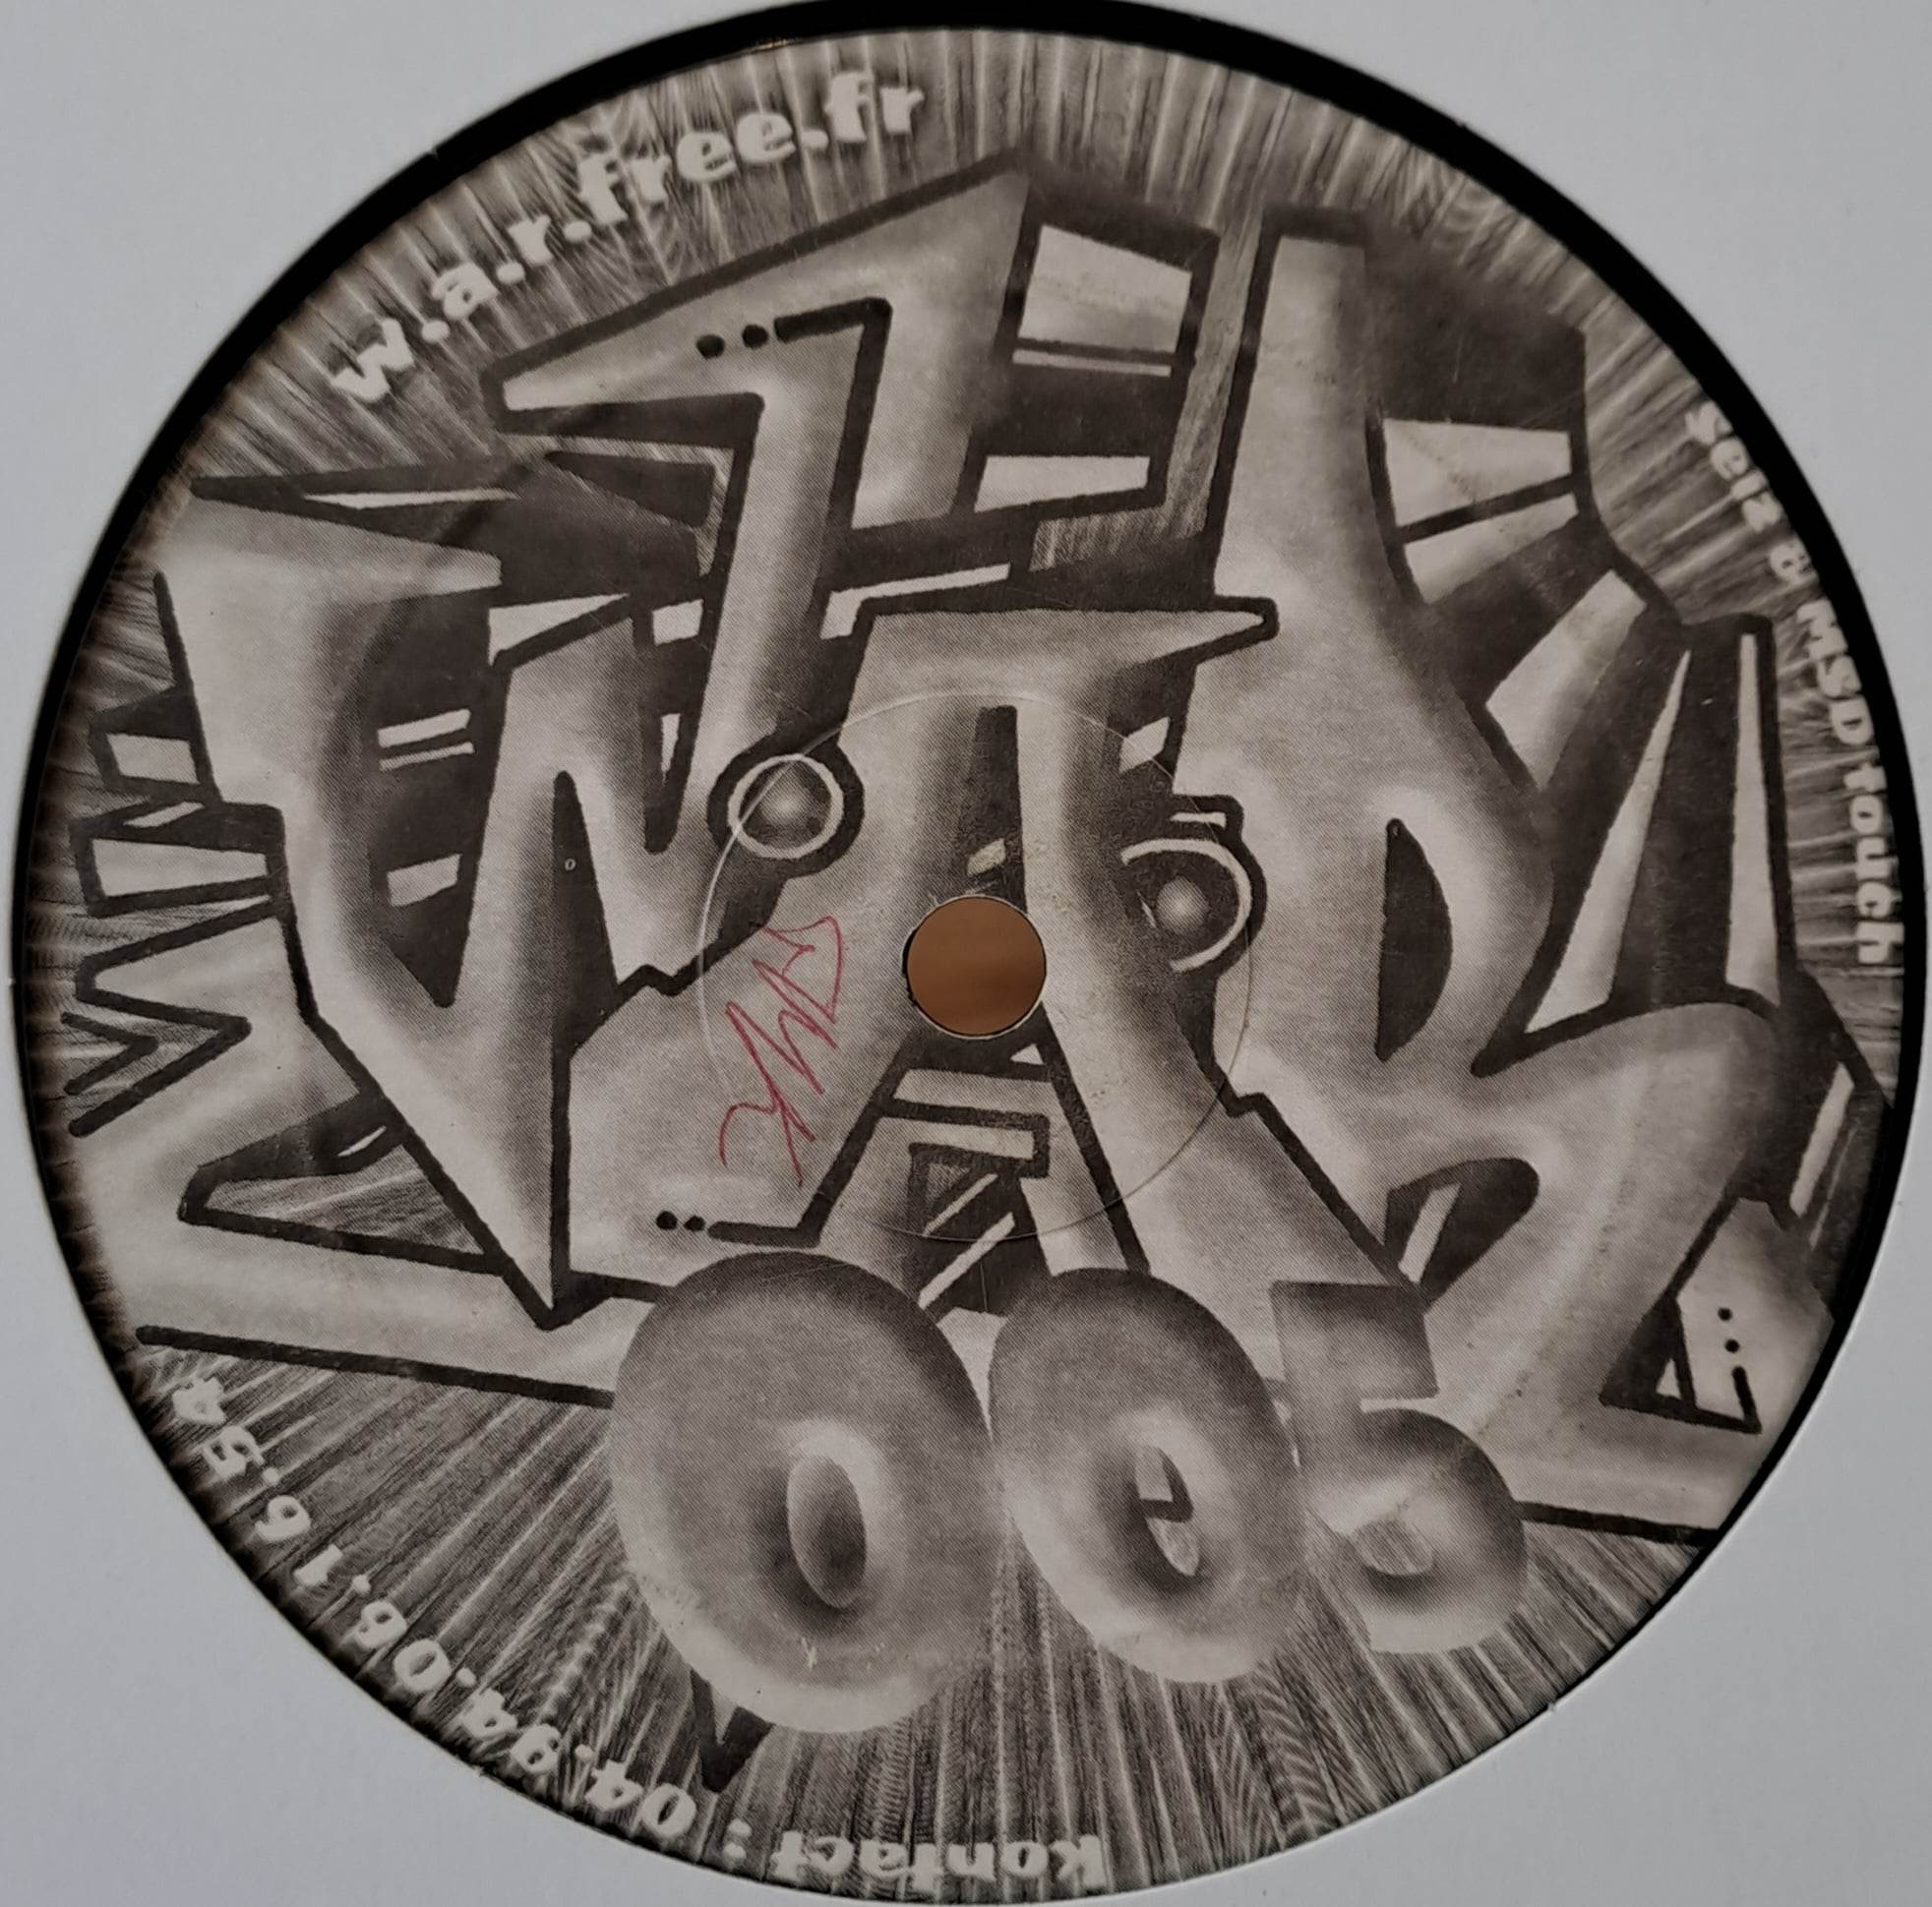 War 005 - vinyle freetekno